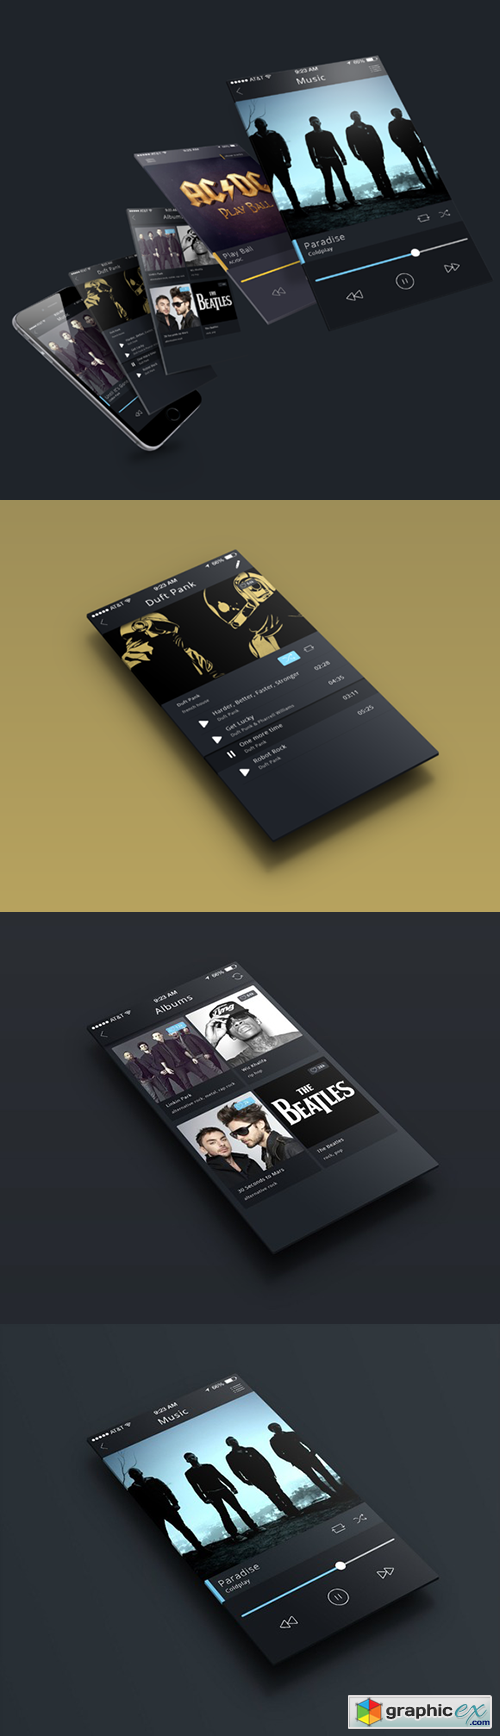 Music Audio App PSD